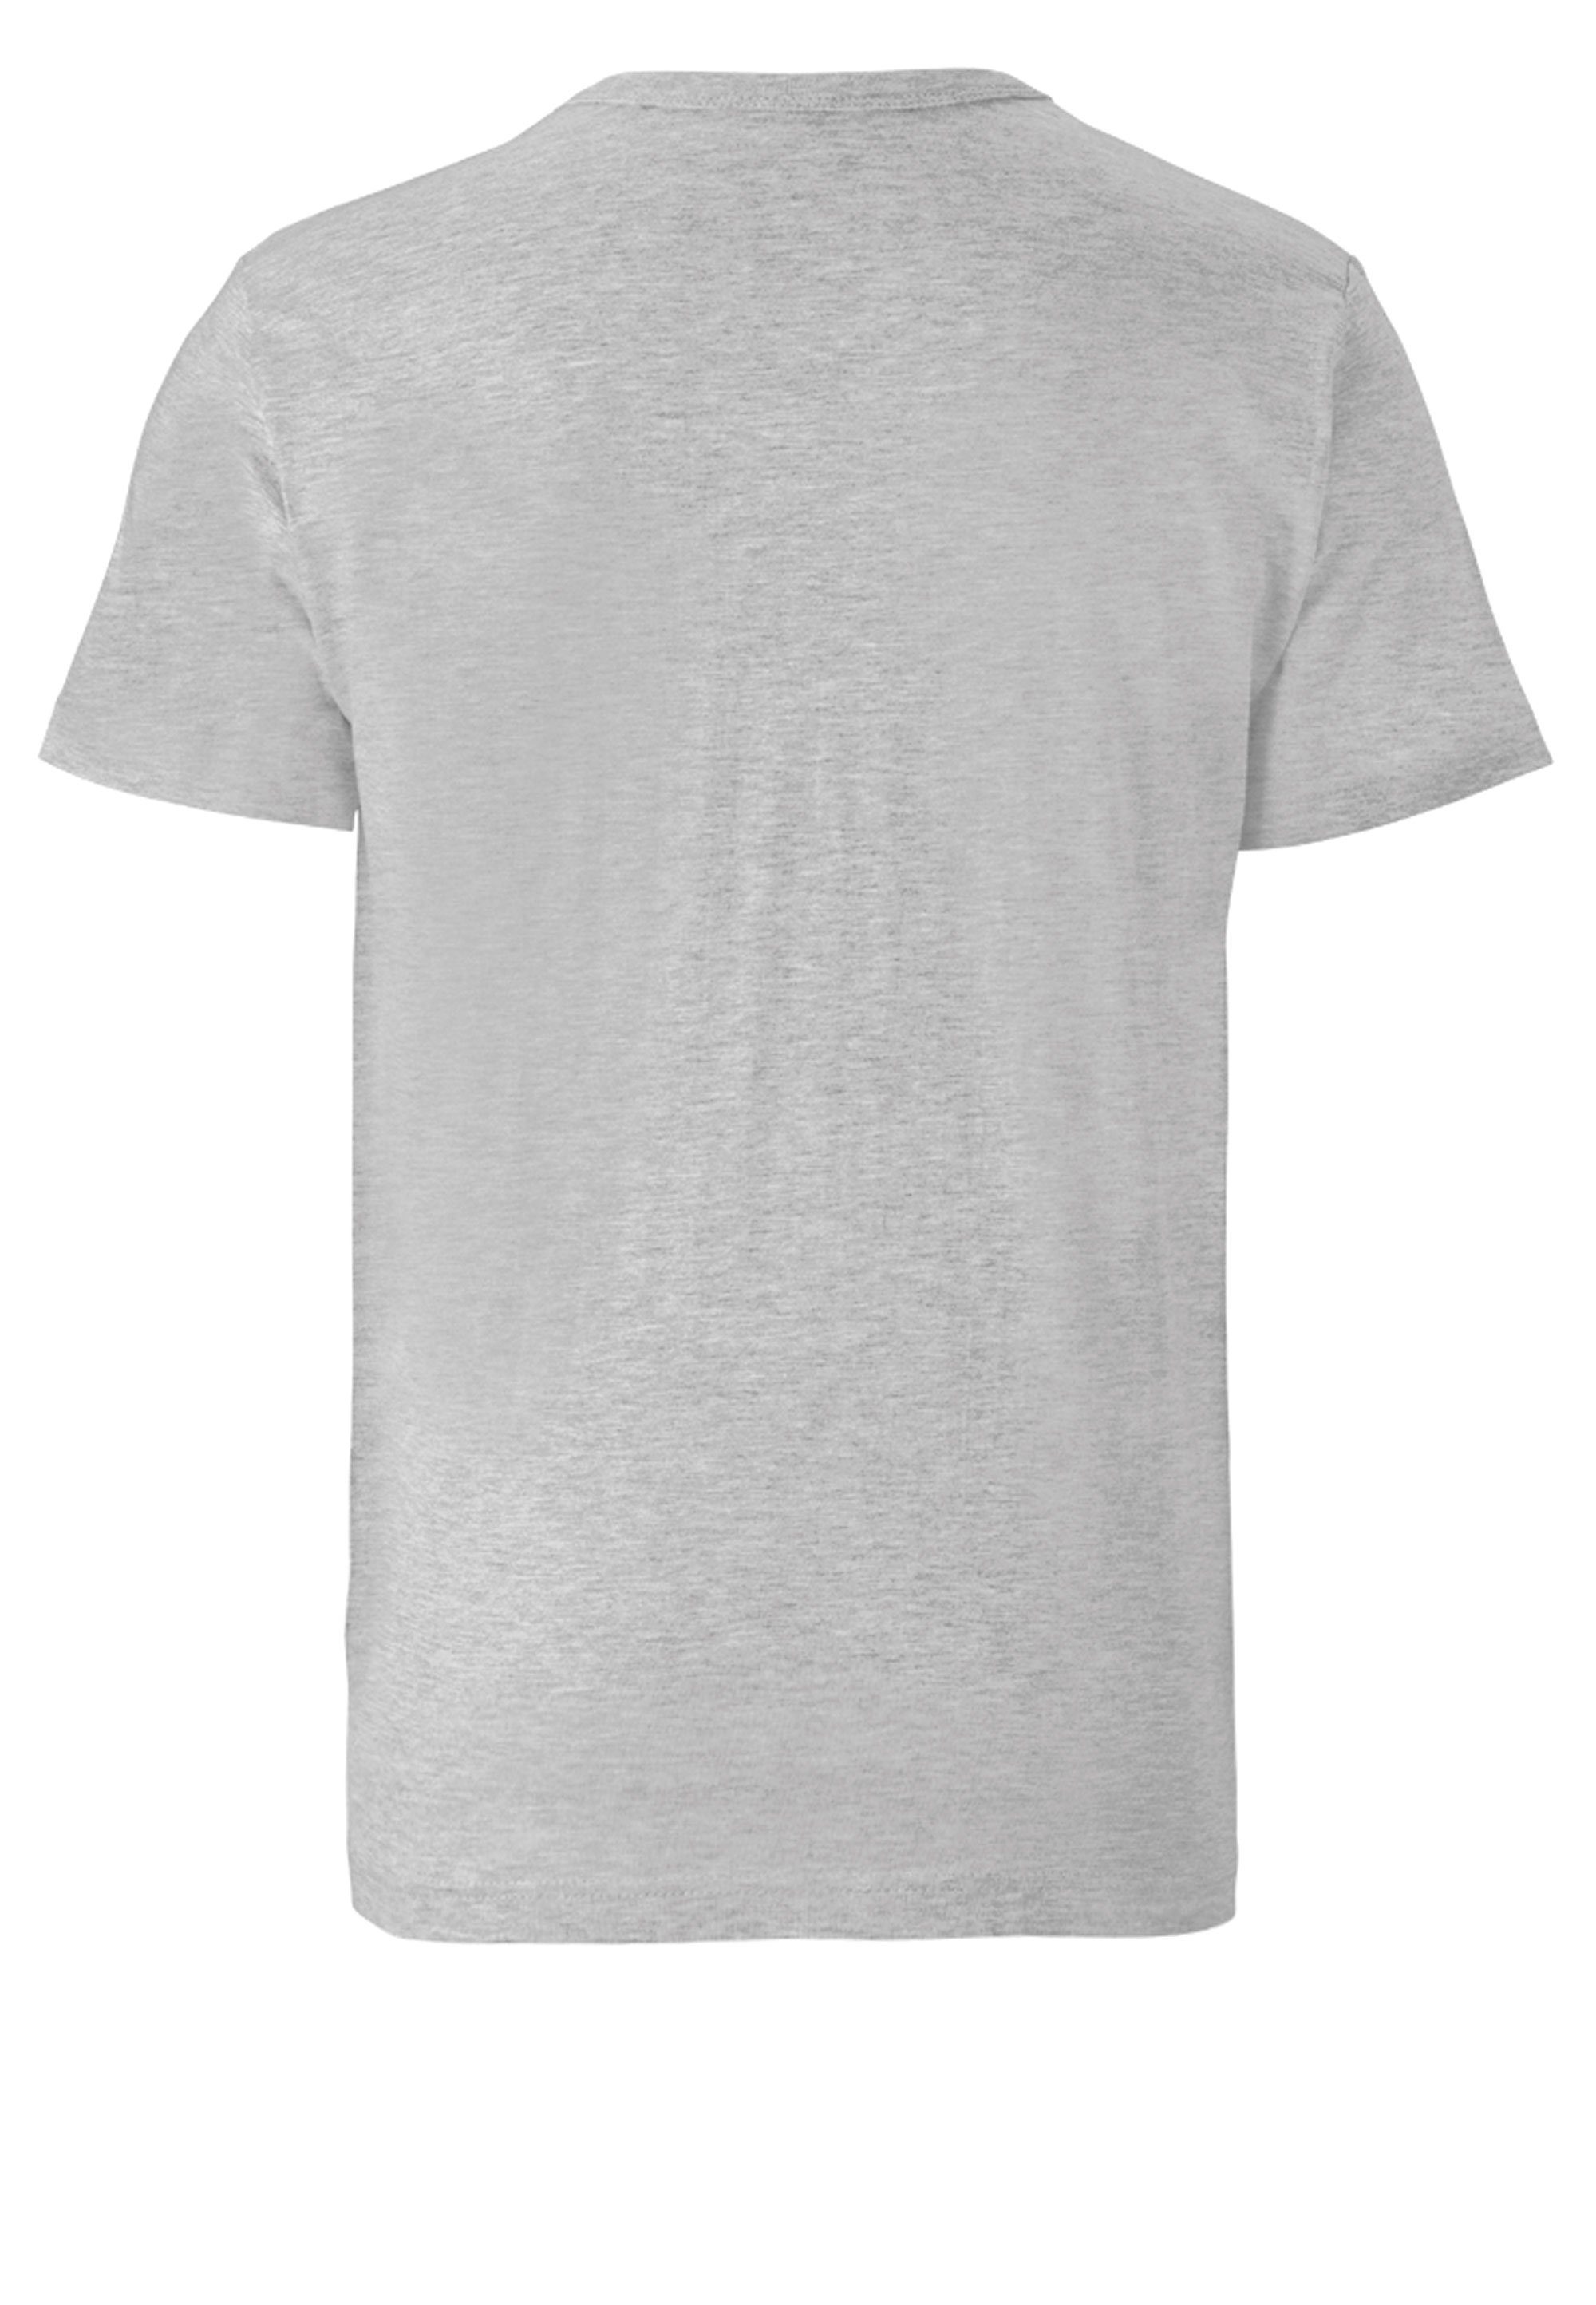 T-Shirt Krümelmonster - Sesamstrasse lizenziertem Originalddesign grau-meliert LOGOSHIRT mit